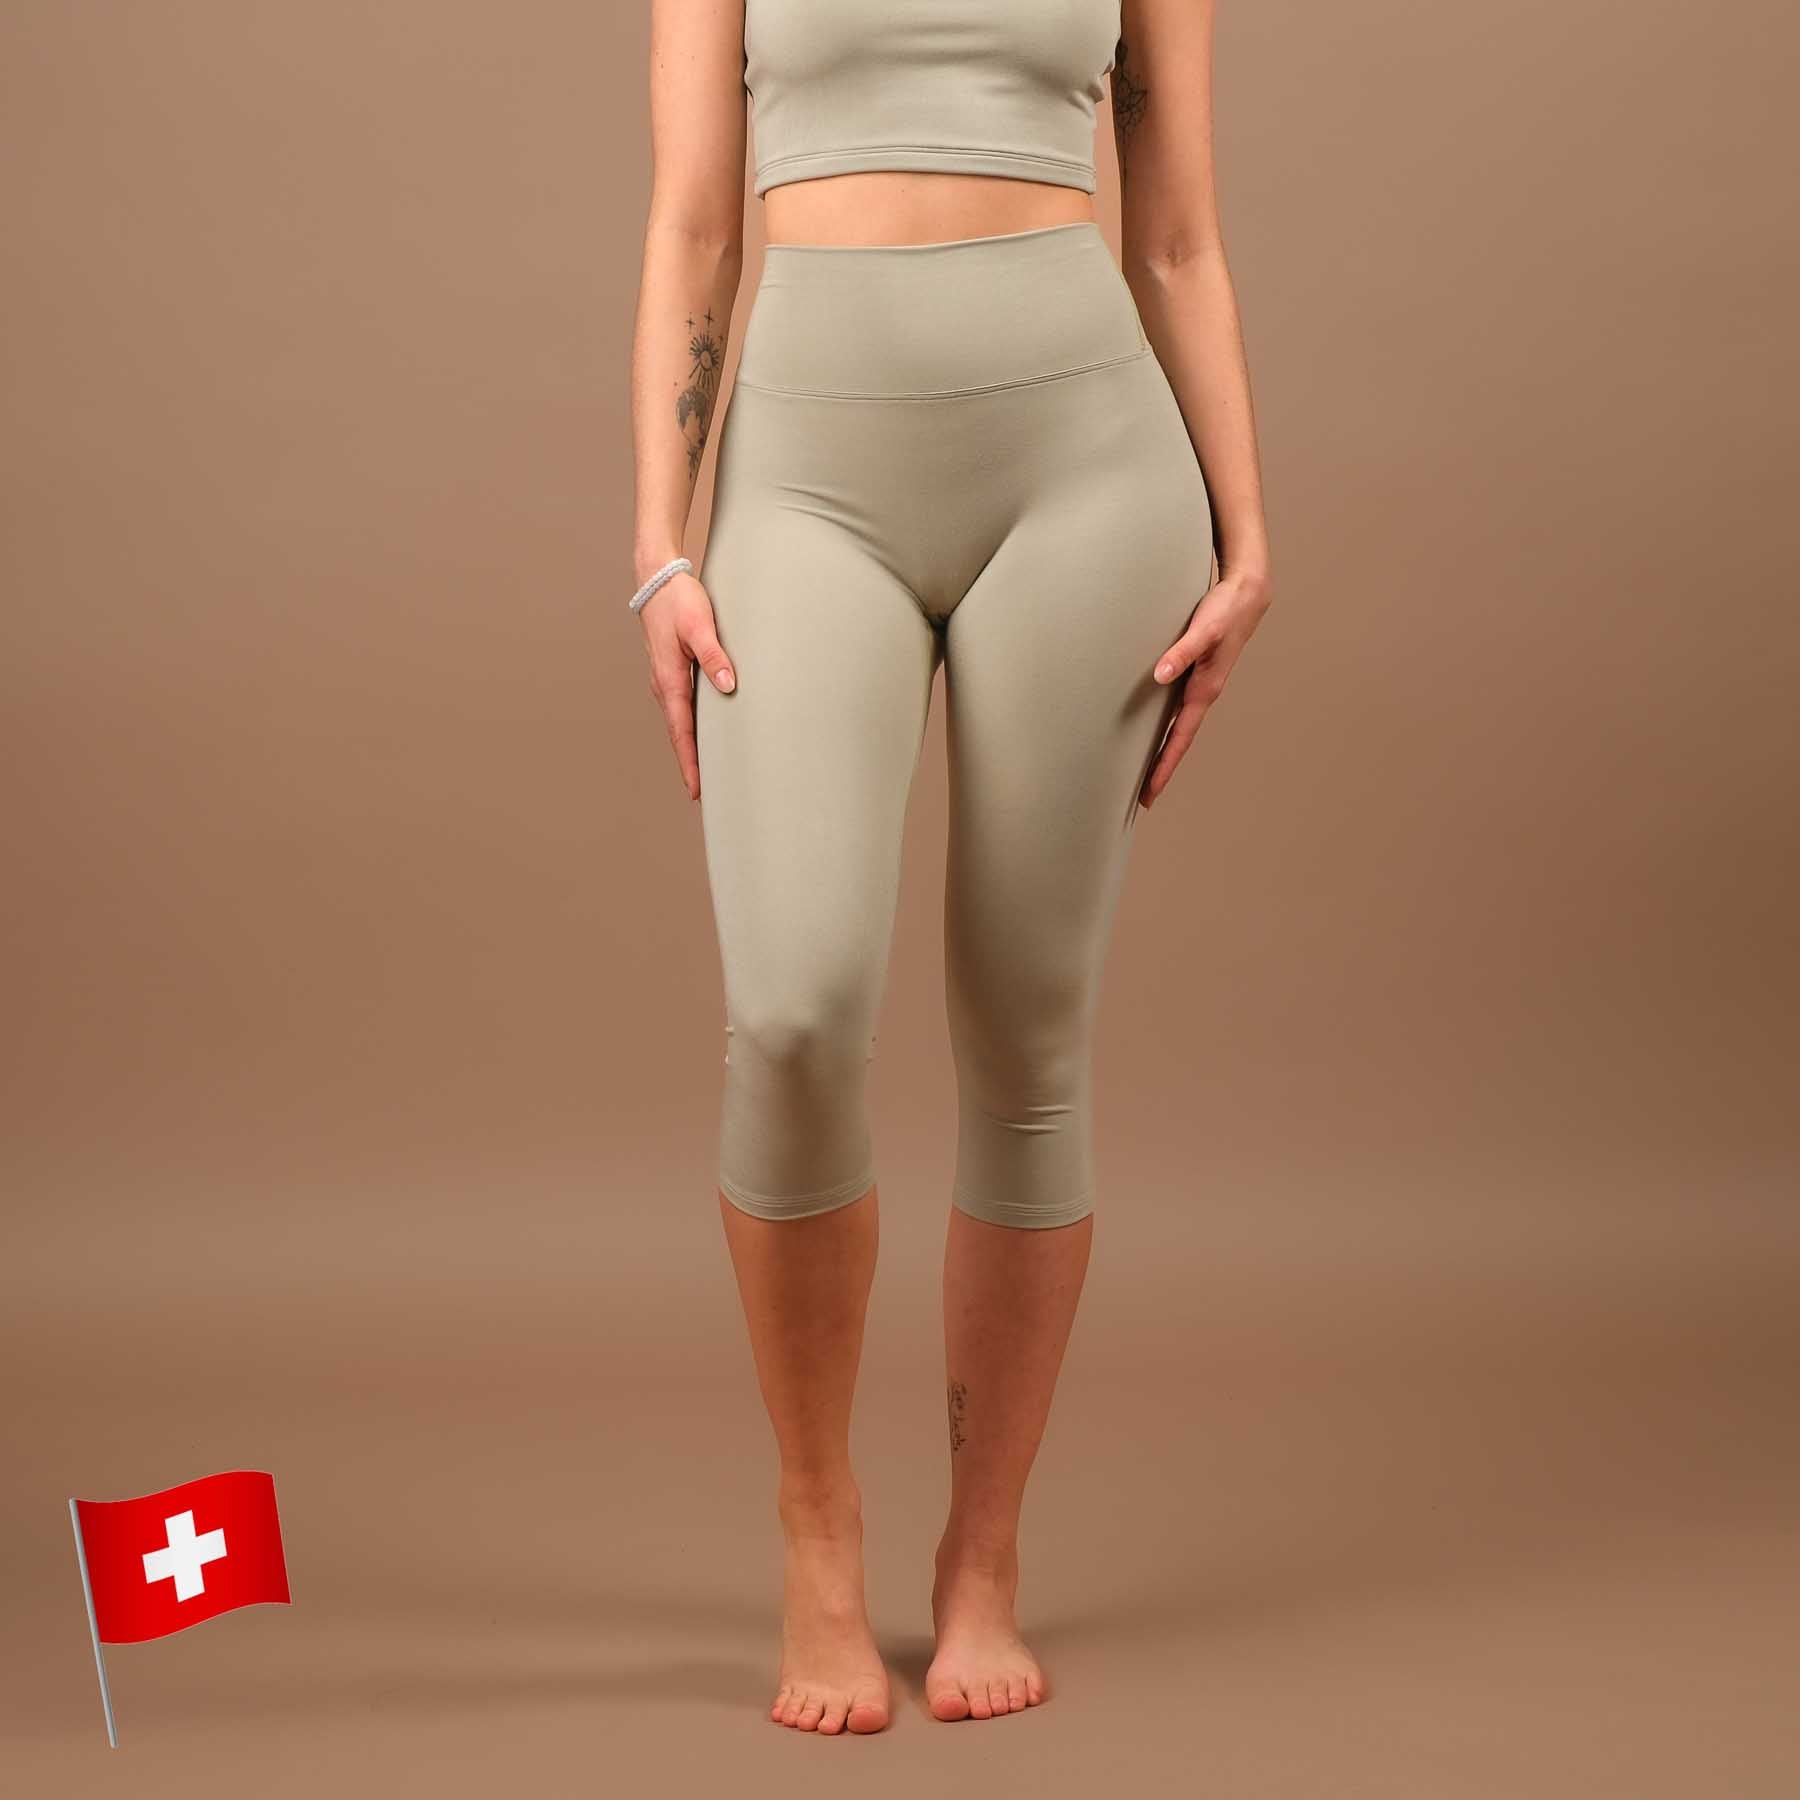 Yoga Capri Leggings Comodi verde giada prodotti in modo sostenibile in Svizzera